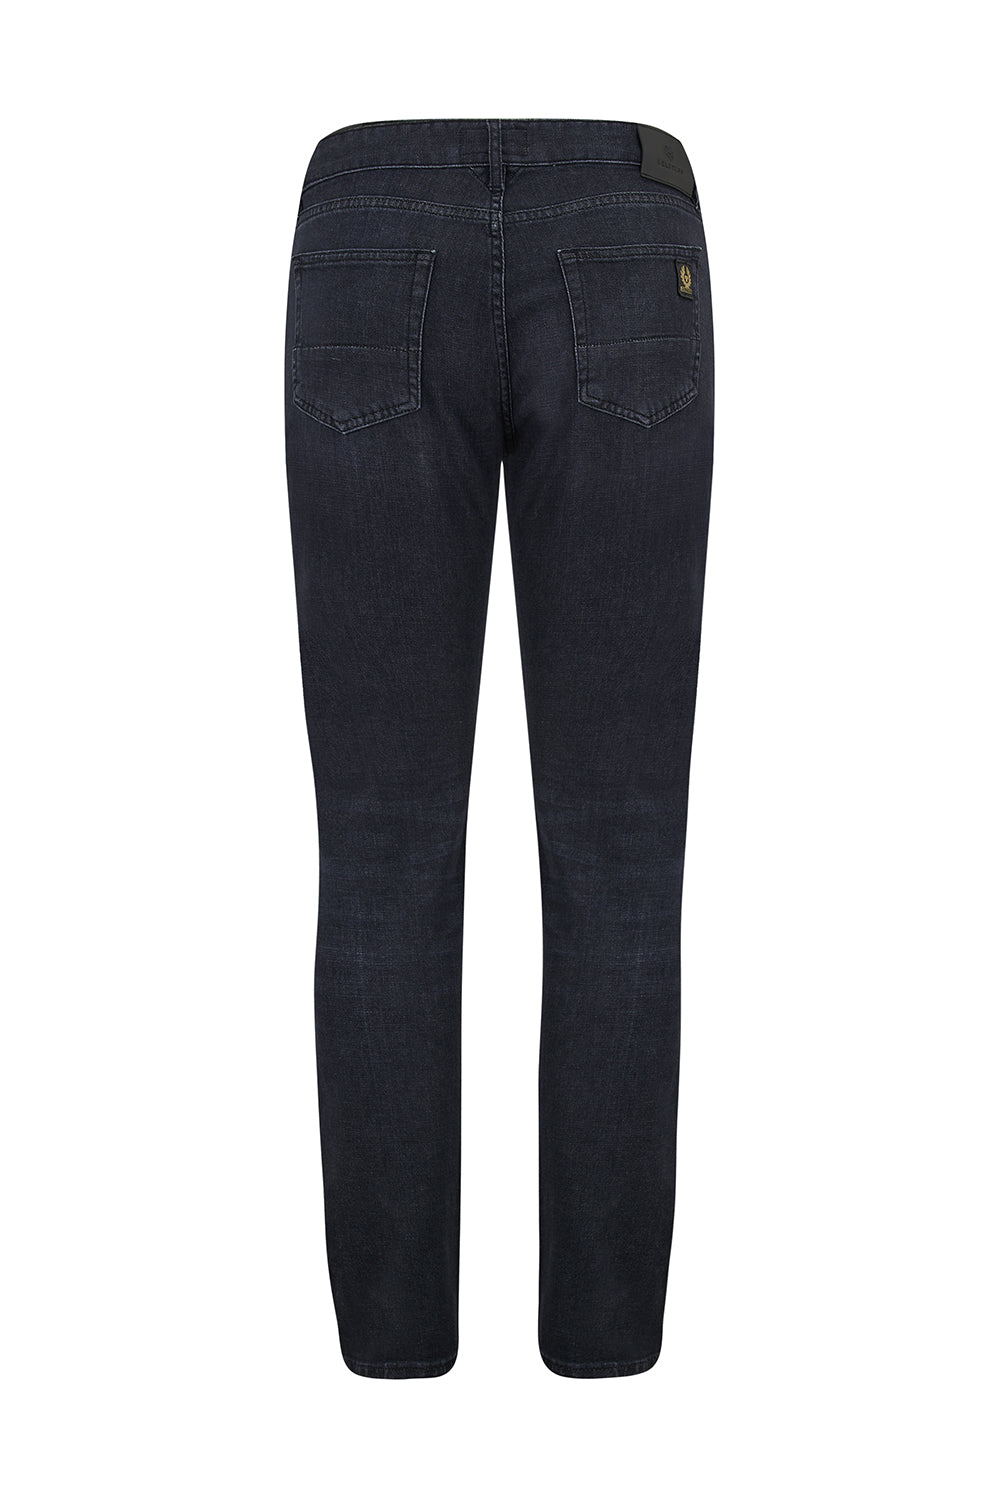 Belstaff Men's Longton Slim Jeans Black - Back View